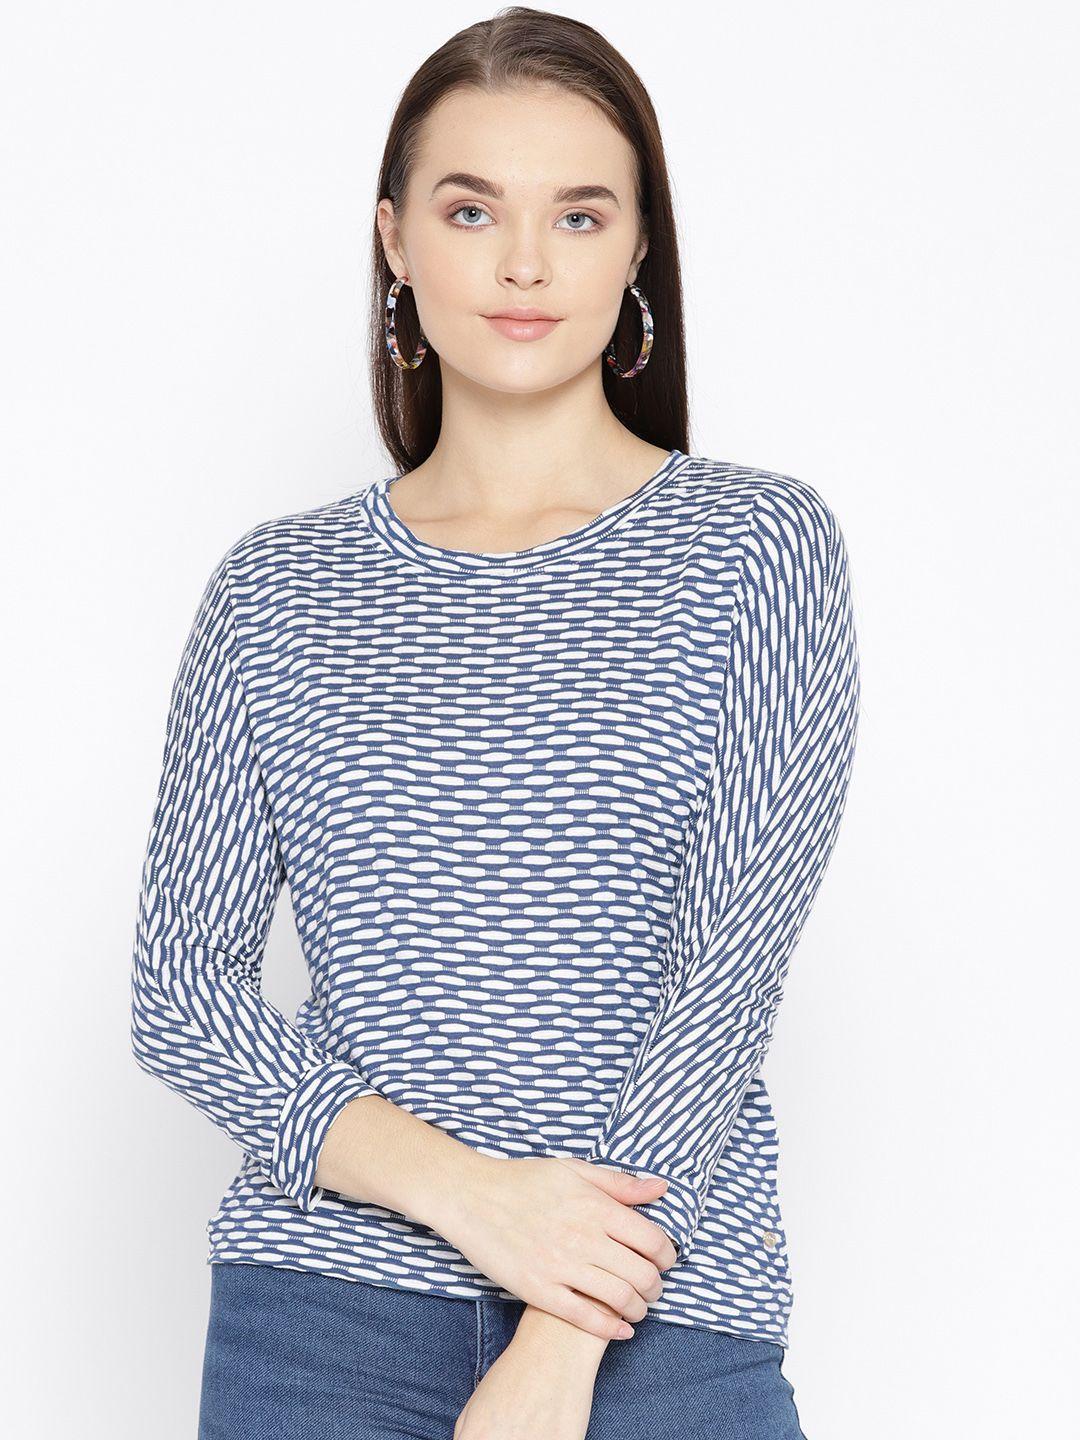 taanz-women-teal-blue-&-white-striped-top